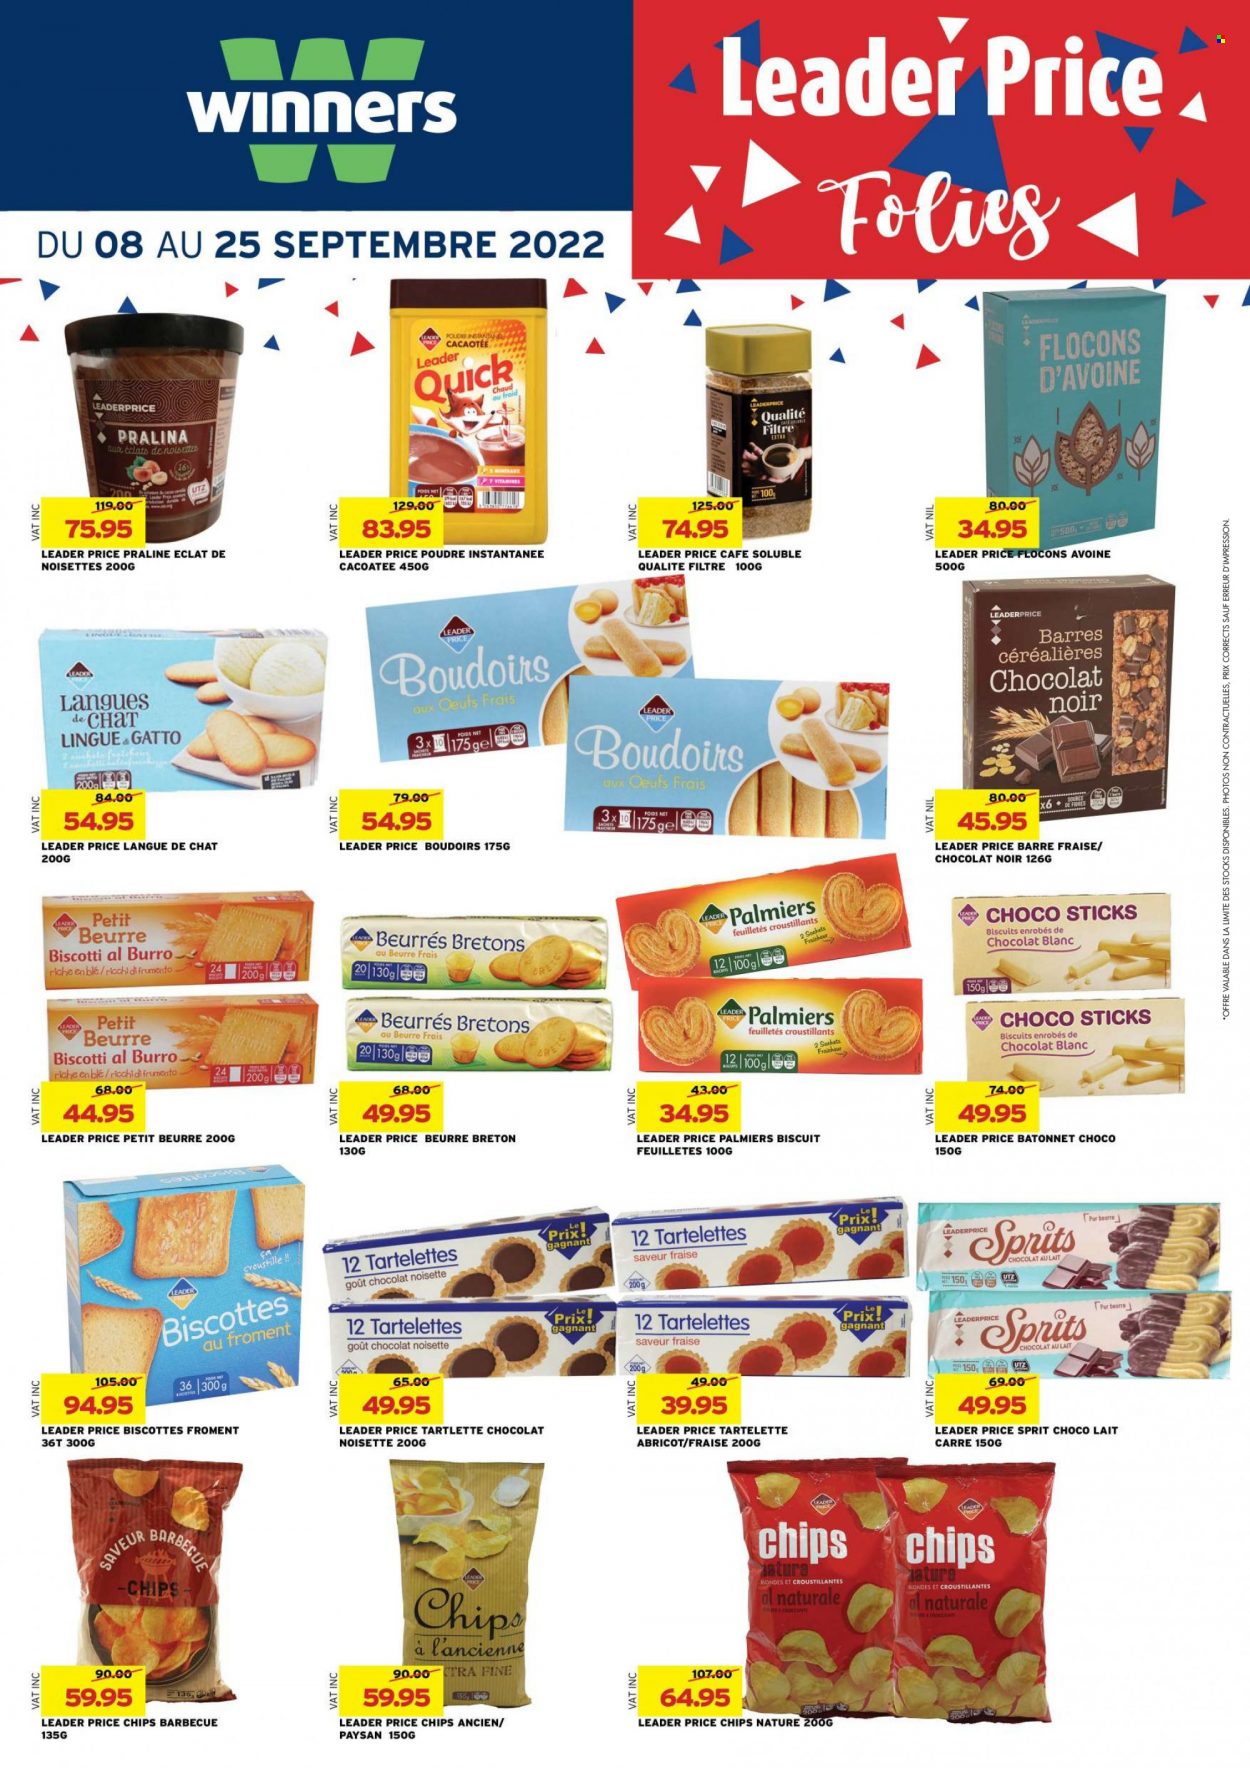 <magasin> - <du DD/MM/YYYY au DD/MM/YYYY> - Produits soldés - ,<products from flyers>. Page 7. 